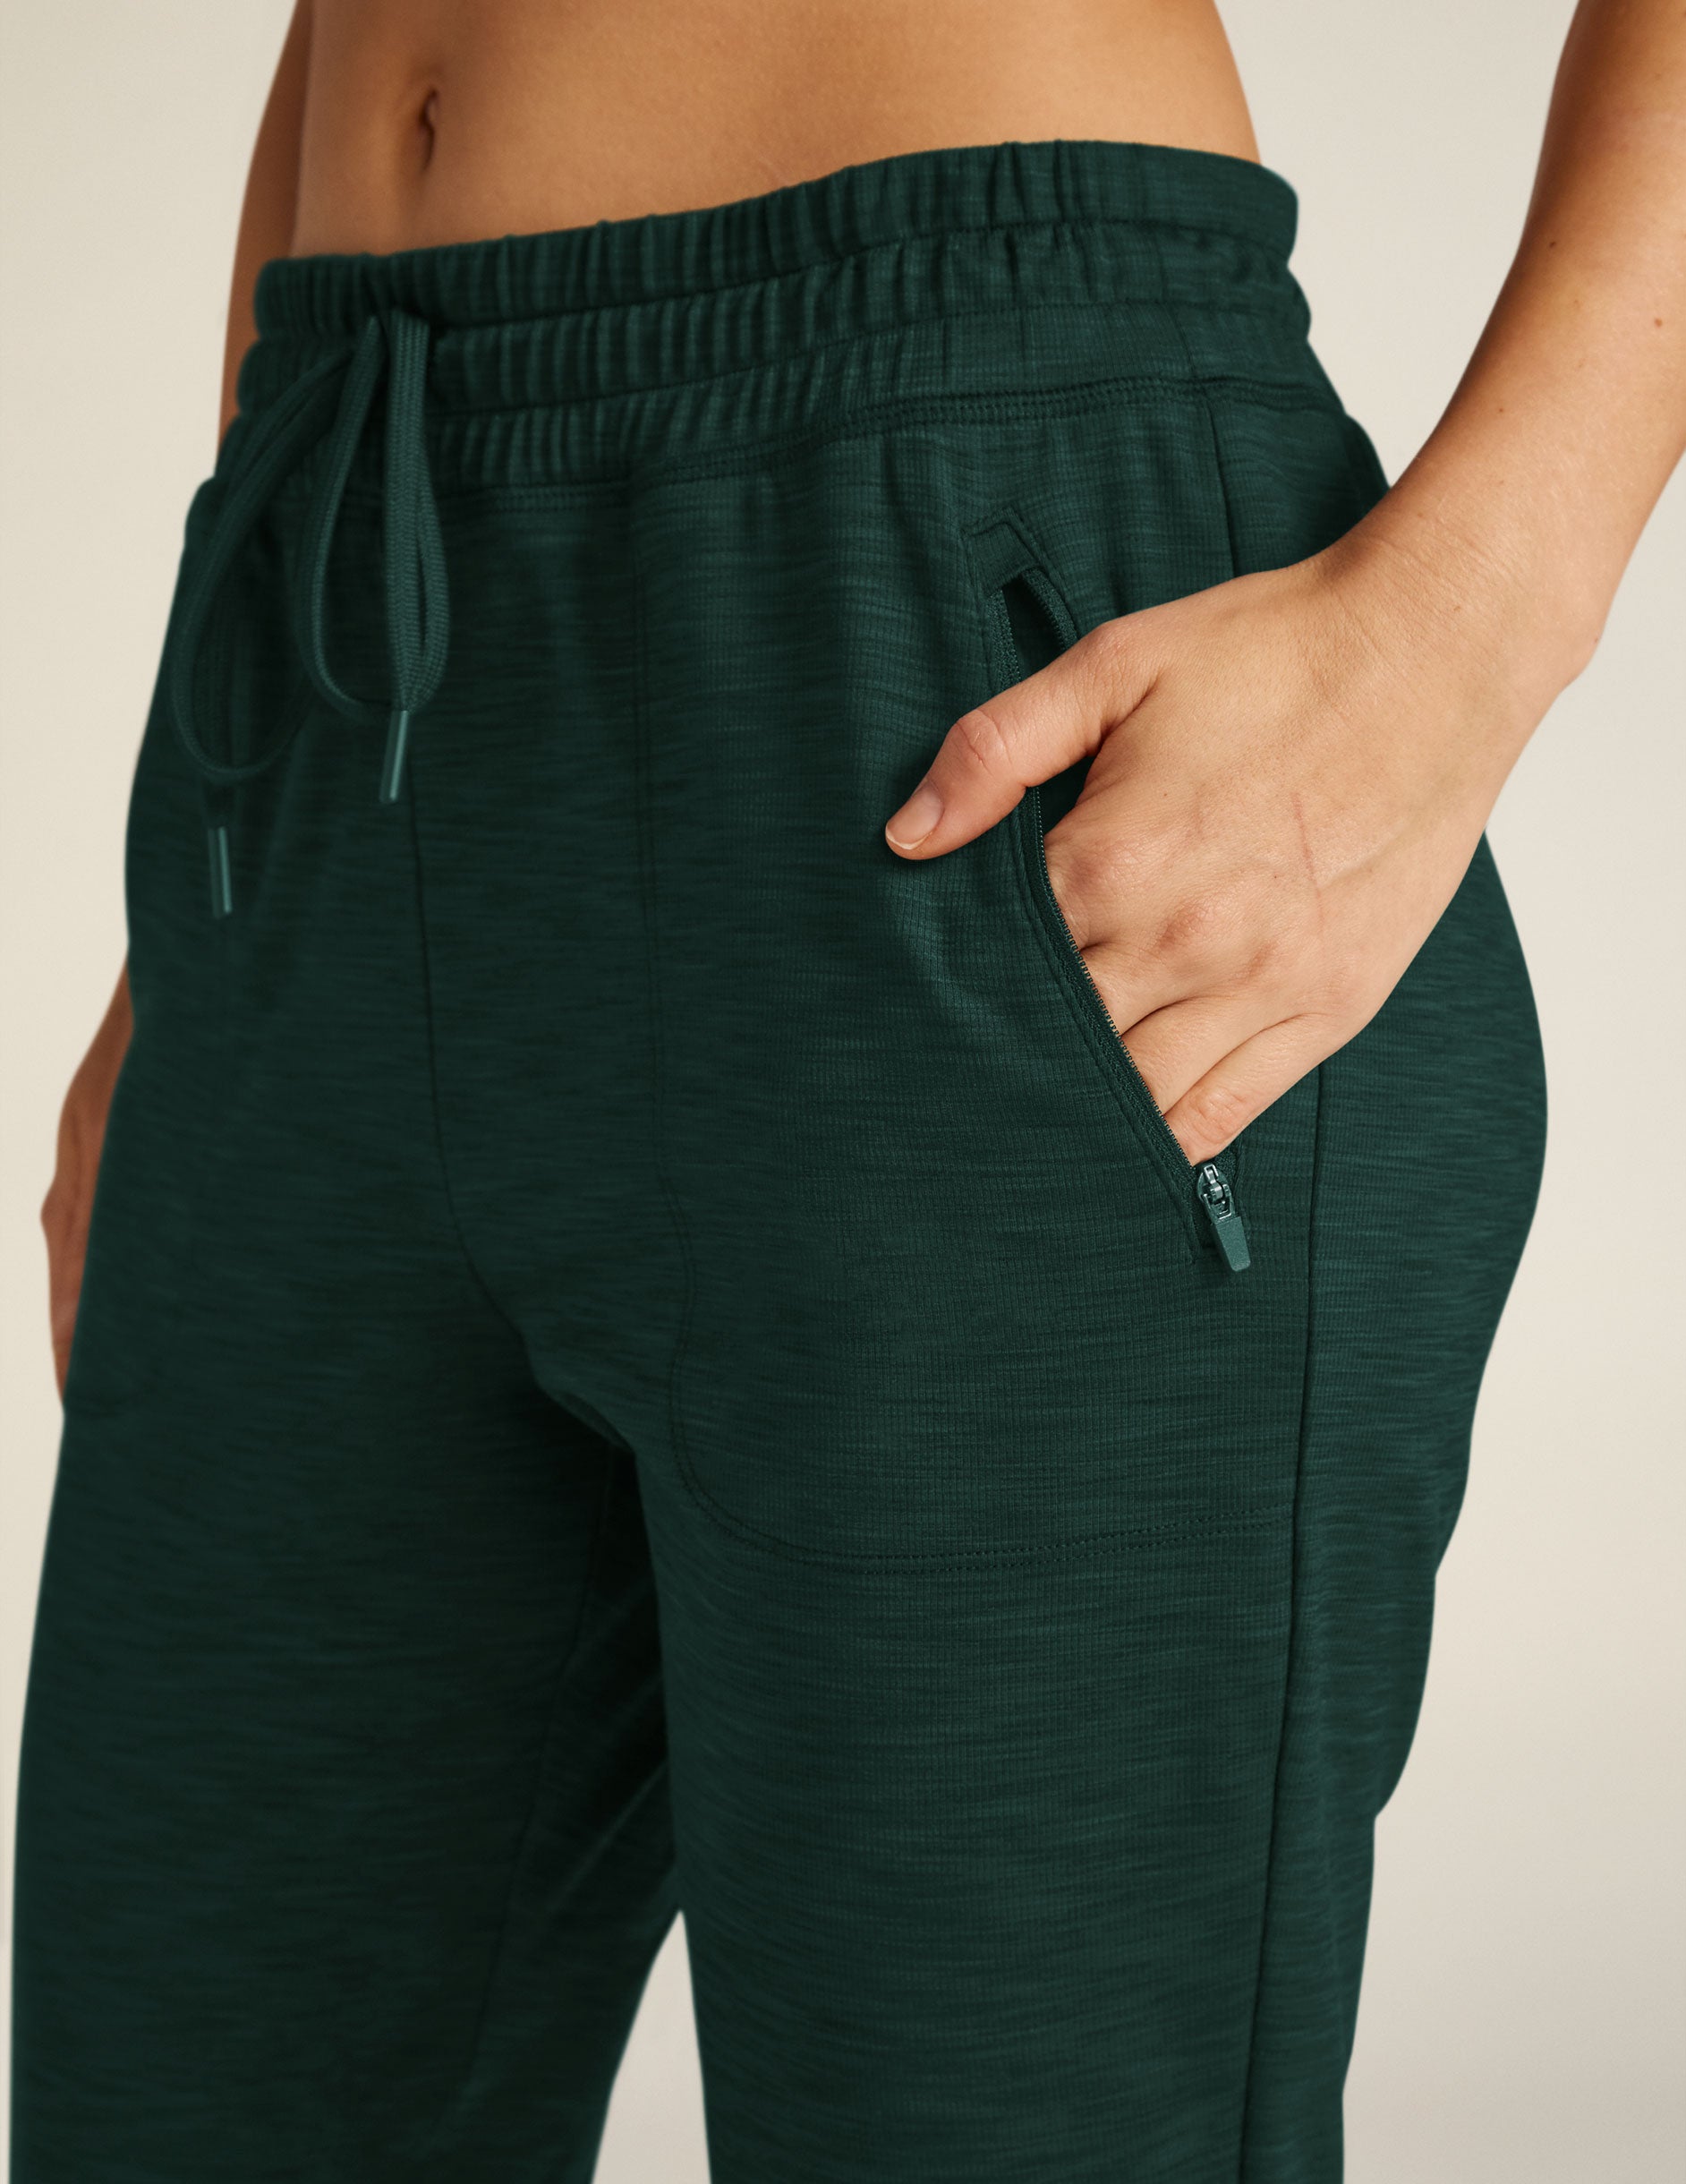 green midi length joggers with pockets.